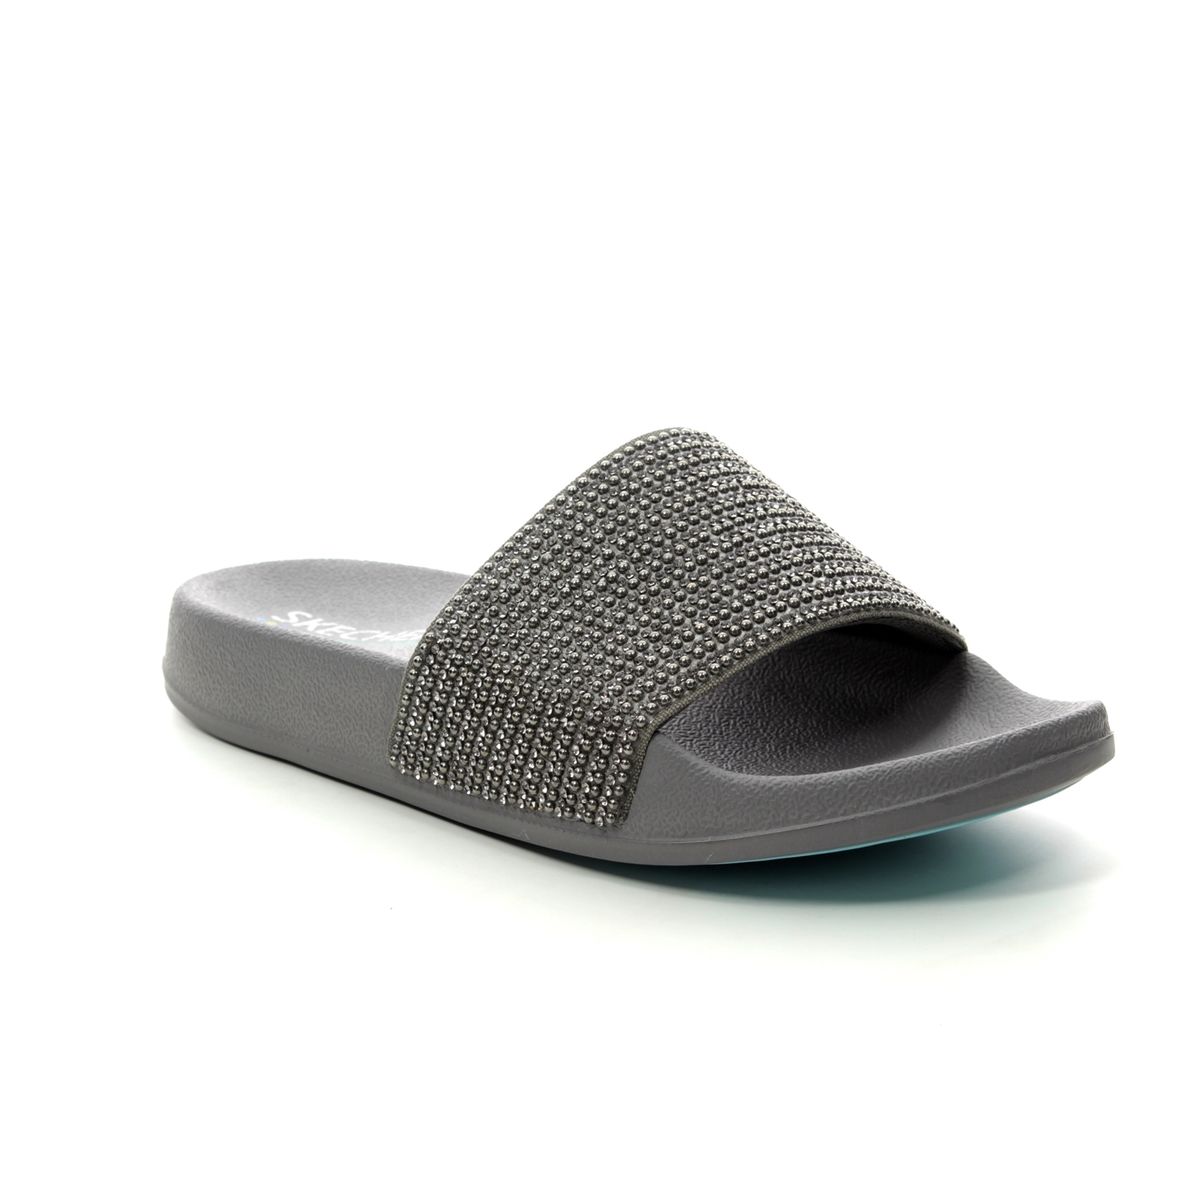 skechers silver sandals Online Shopping 